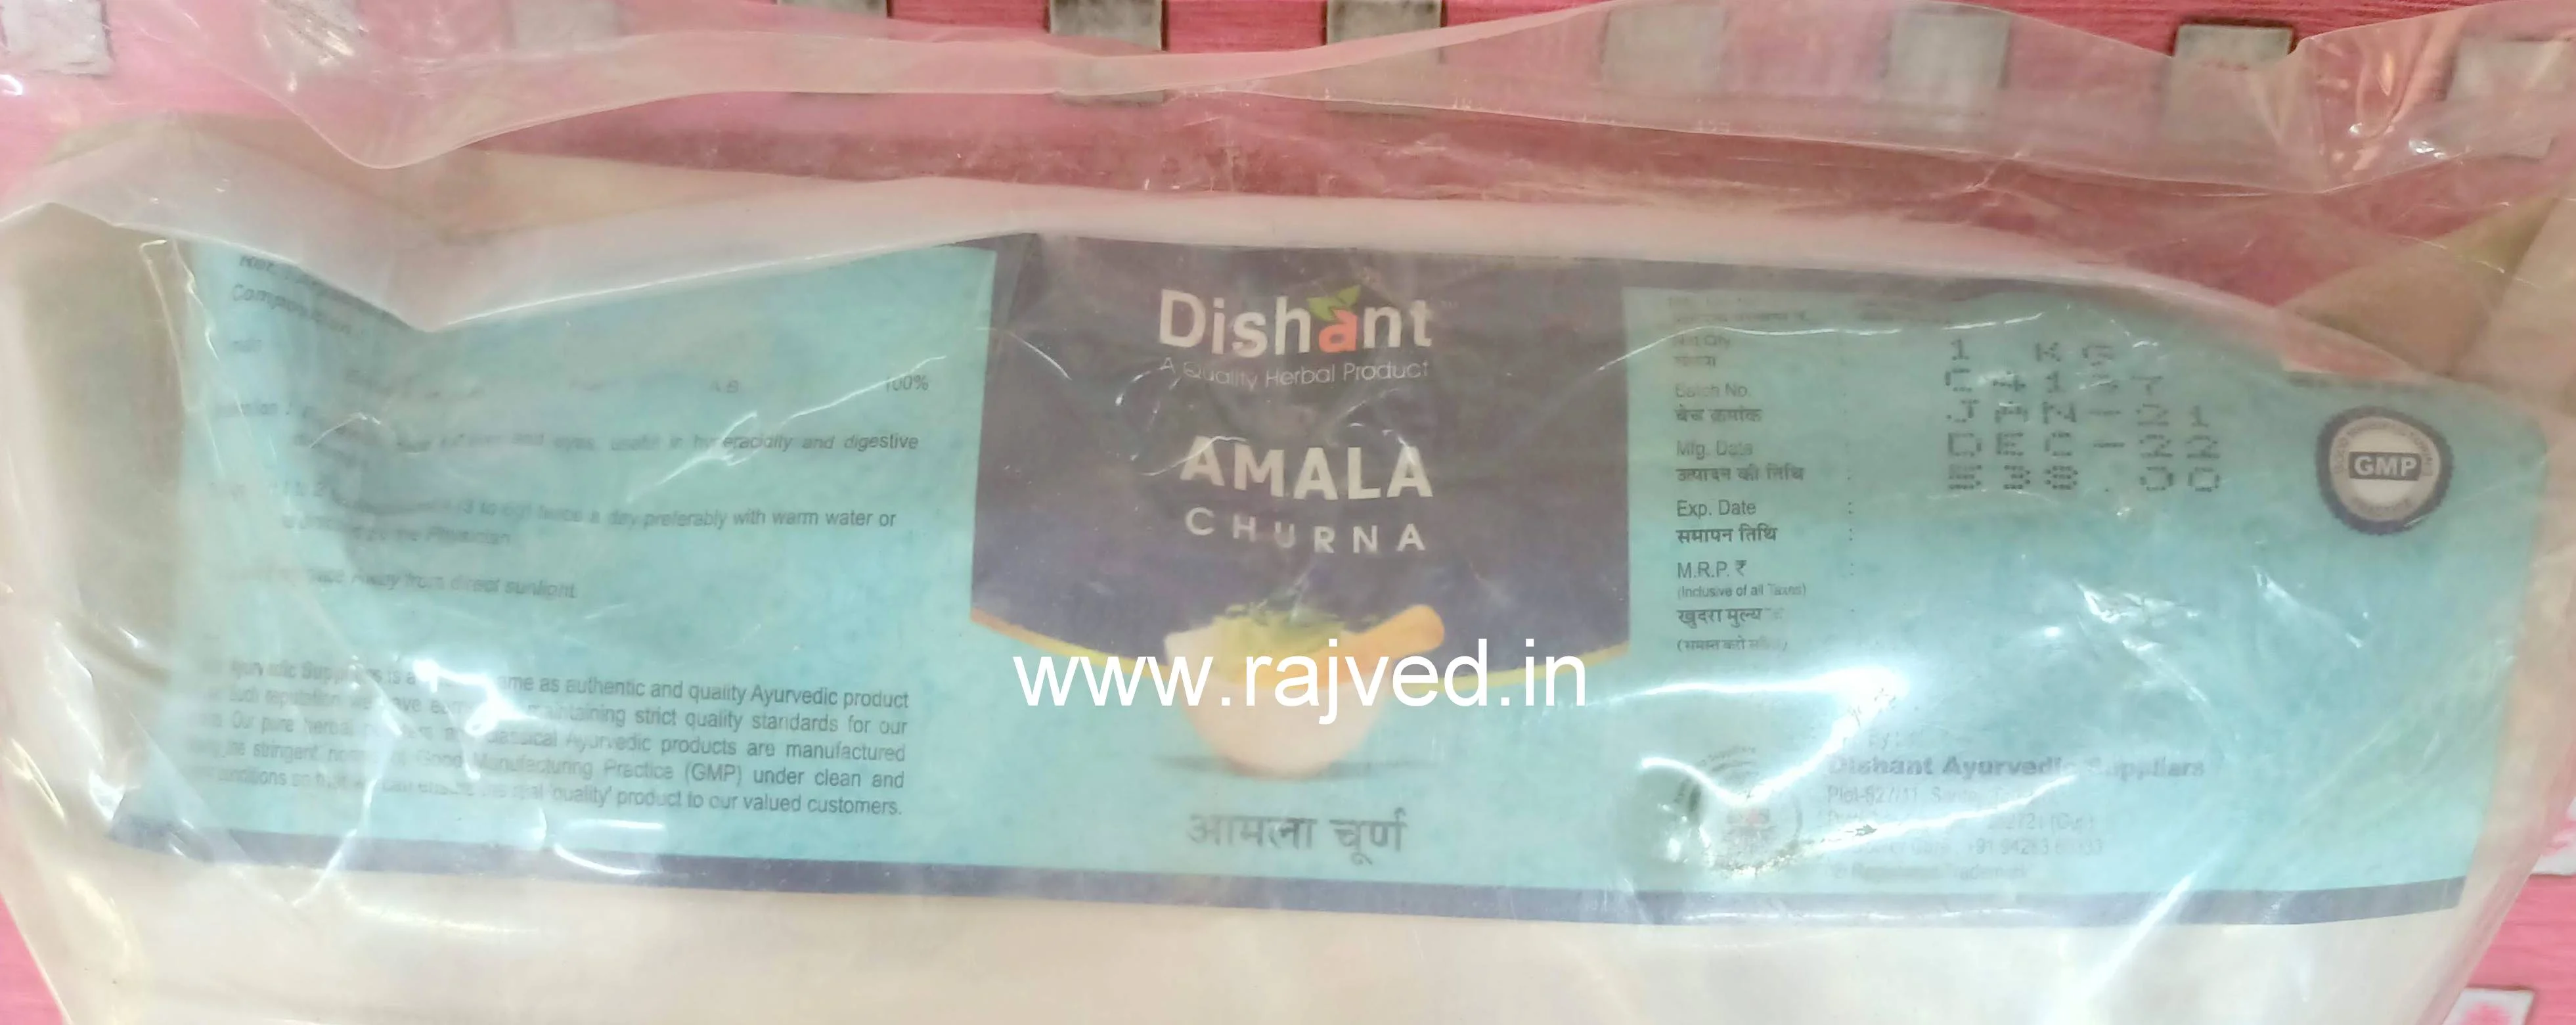 amla churna 1 kg dishant ayurvedic suppliers